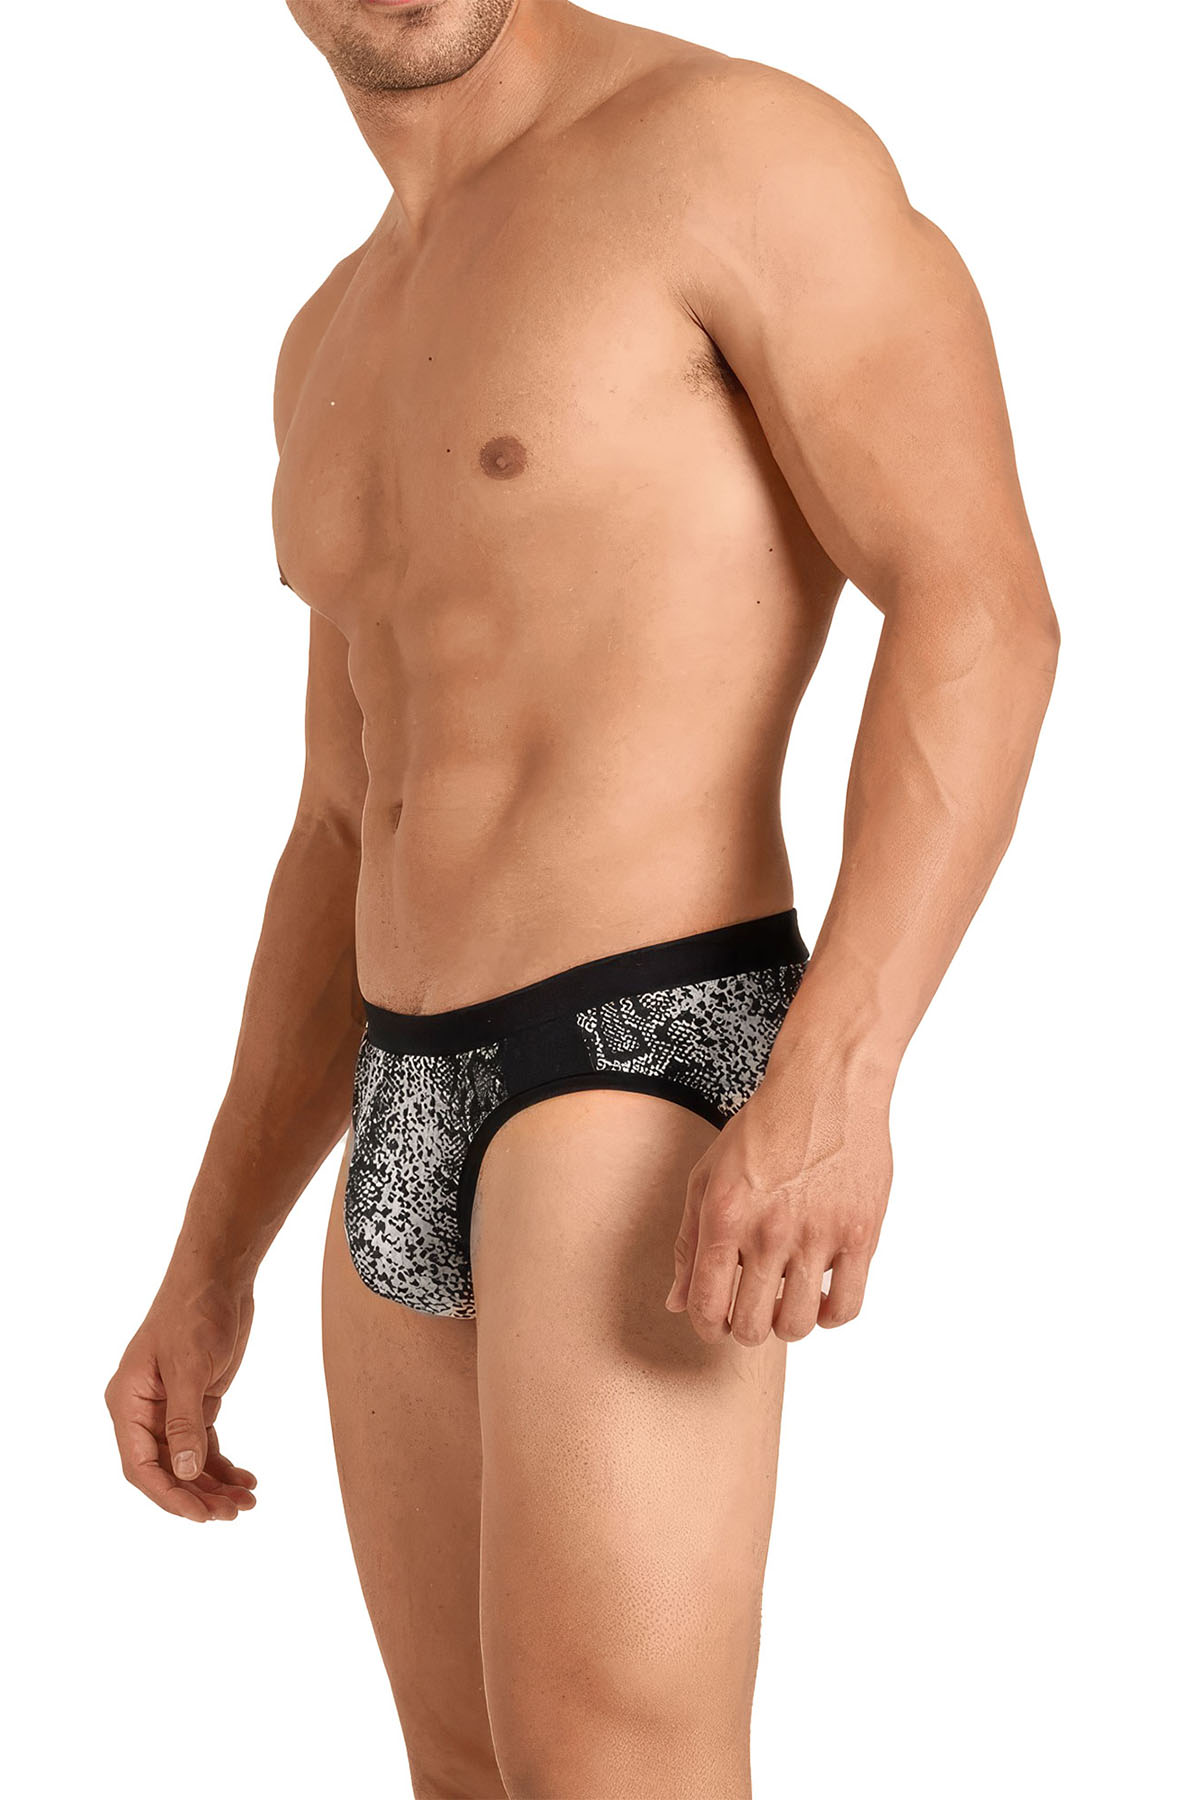 Go Softwear Prowl Python Print Bikini 3411-PYTH Mens Briefs Topdrawers Underwear for